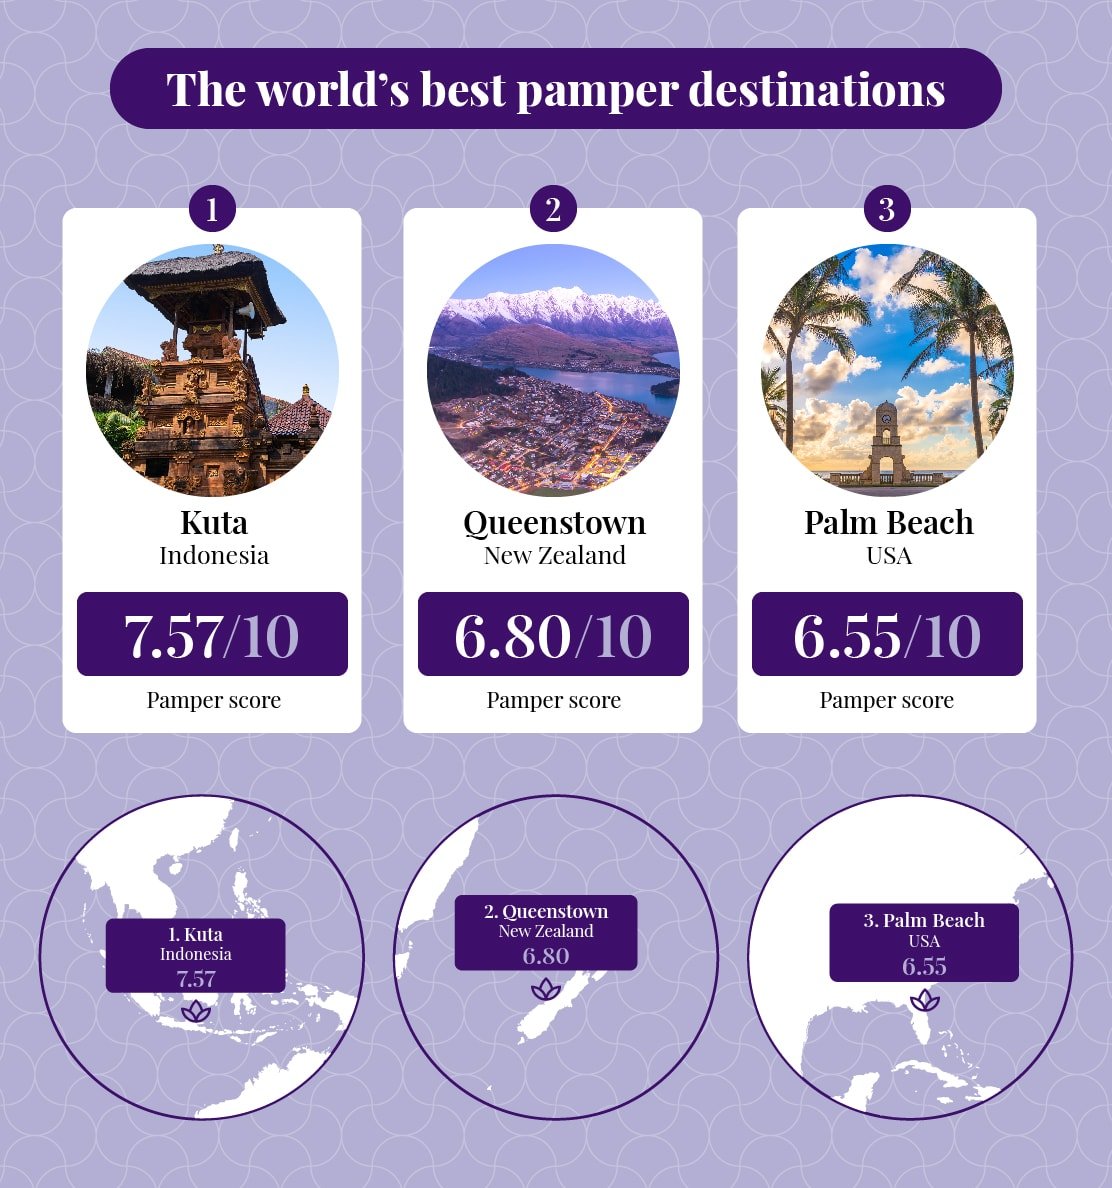 The world's best pamper destinations